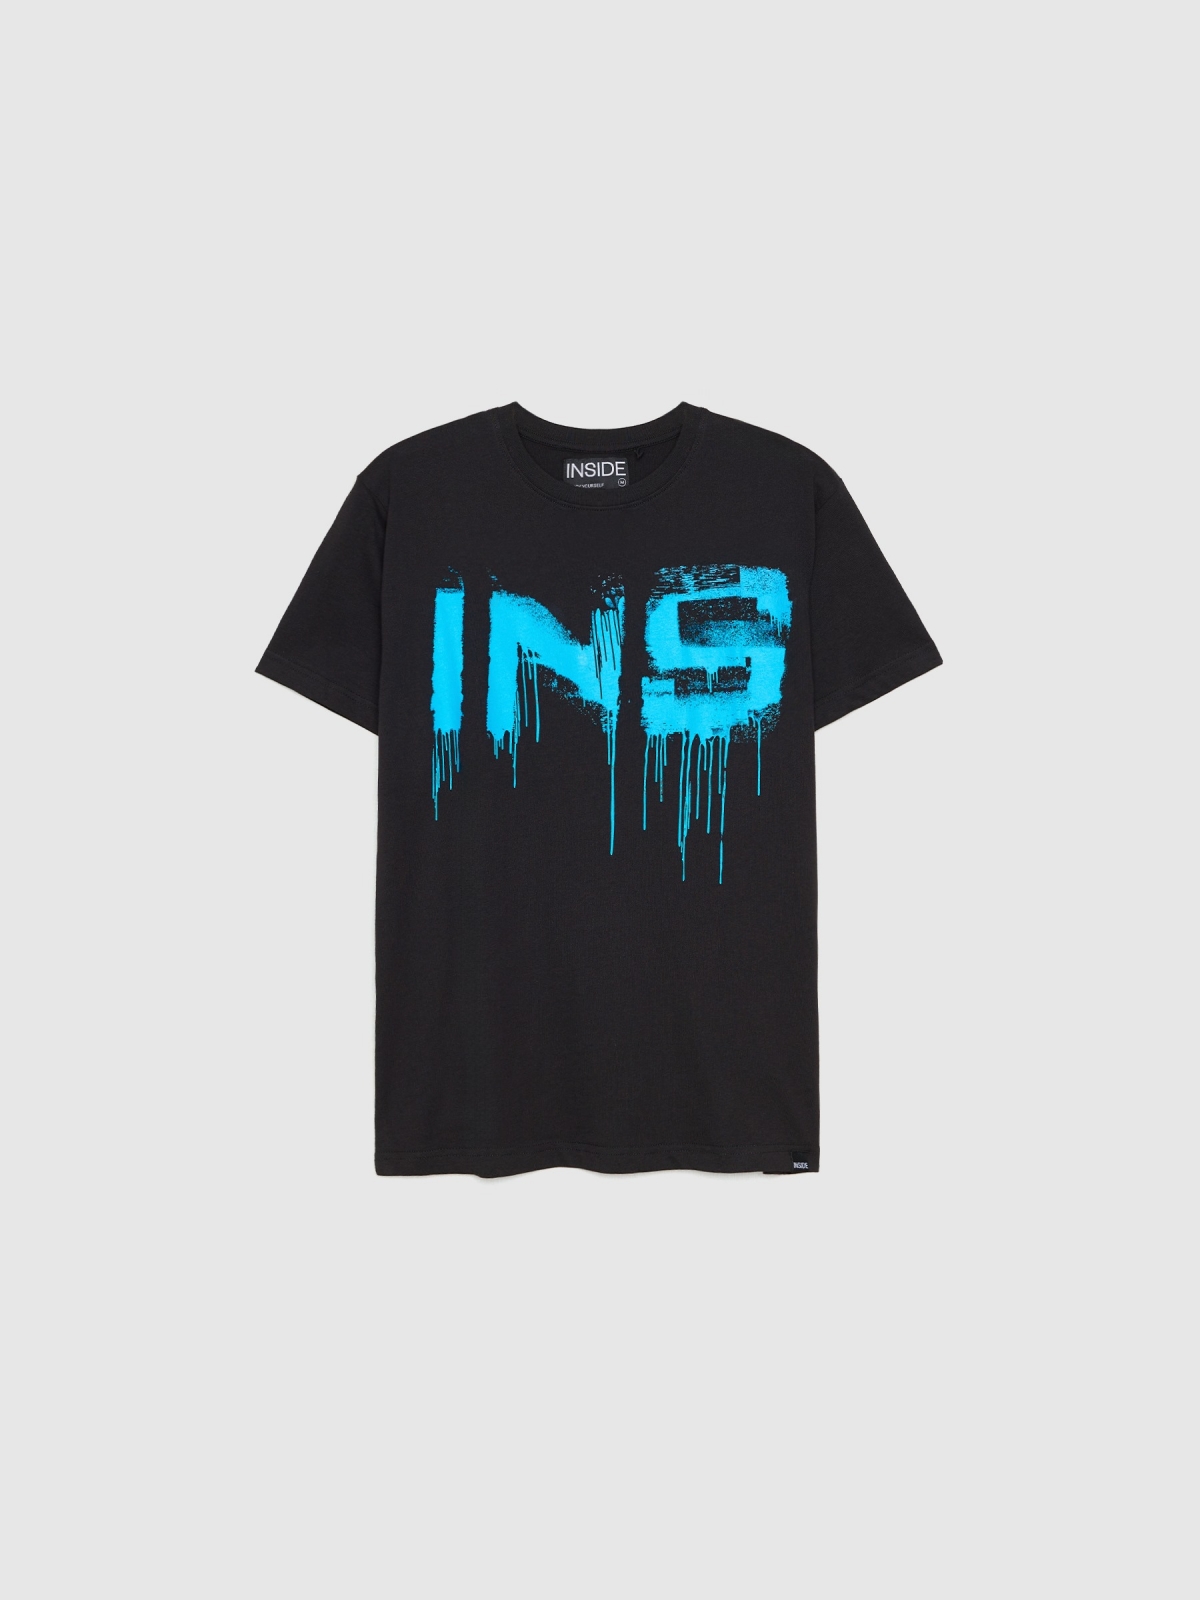  INSIDE spray T-shirt black